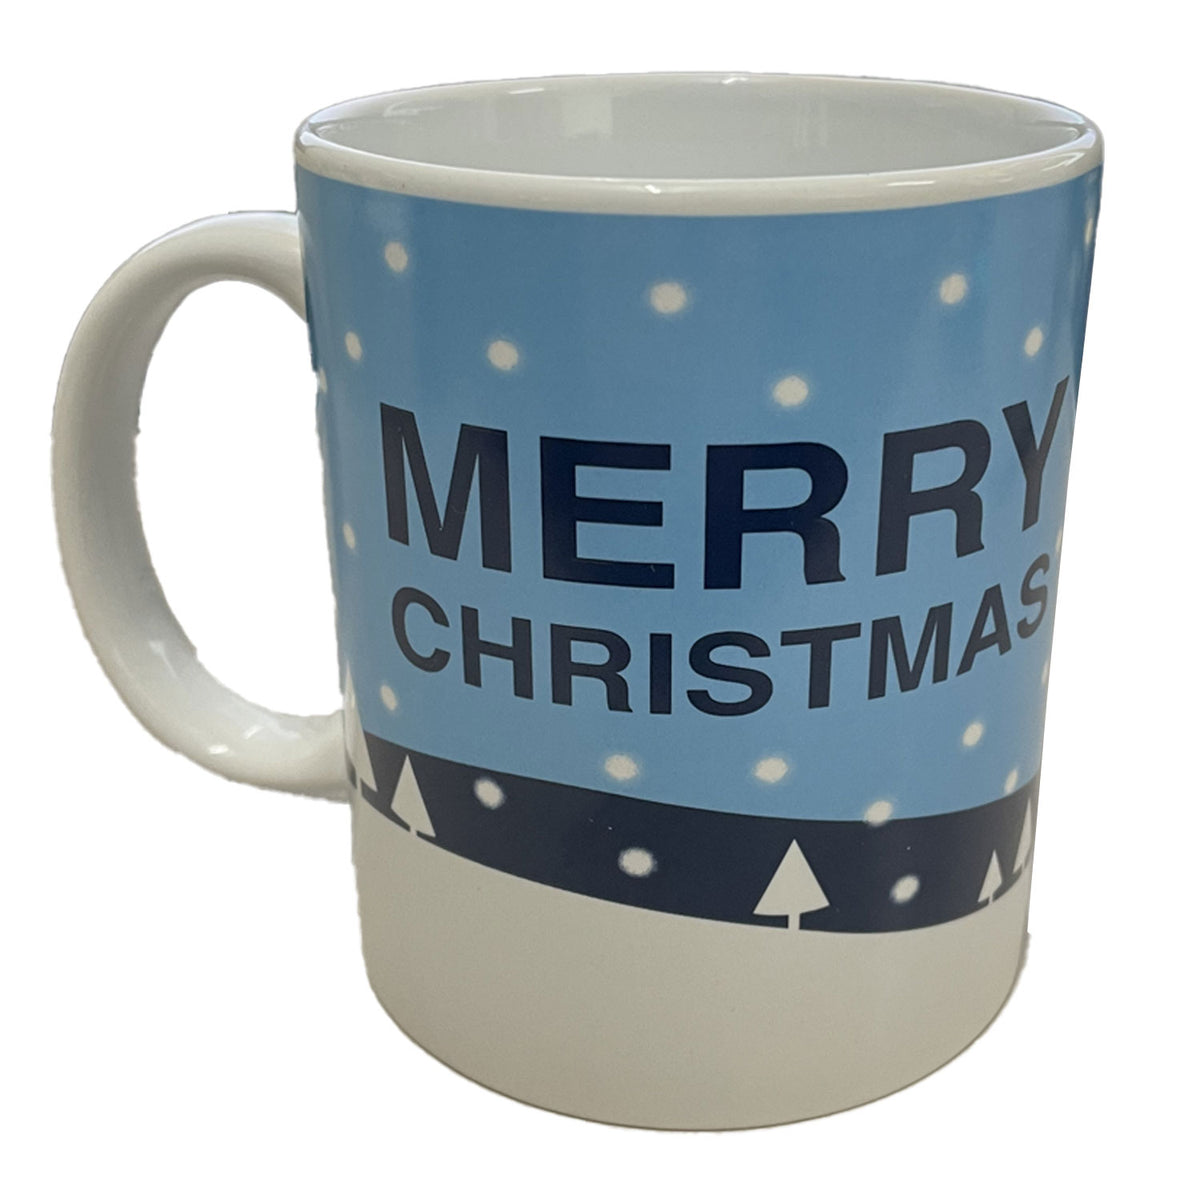 Manchester City F.C Christmas Penguin Mug I